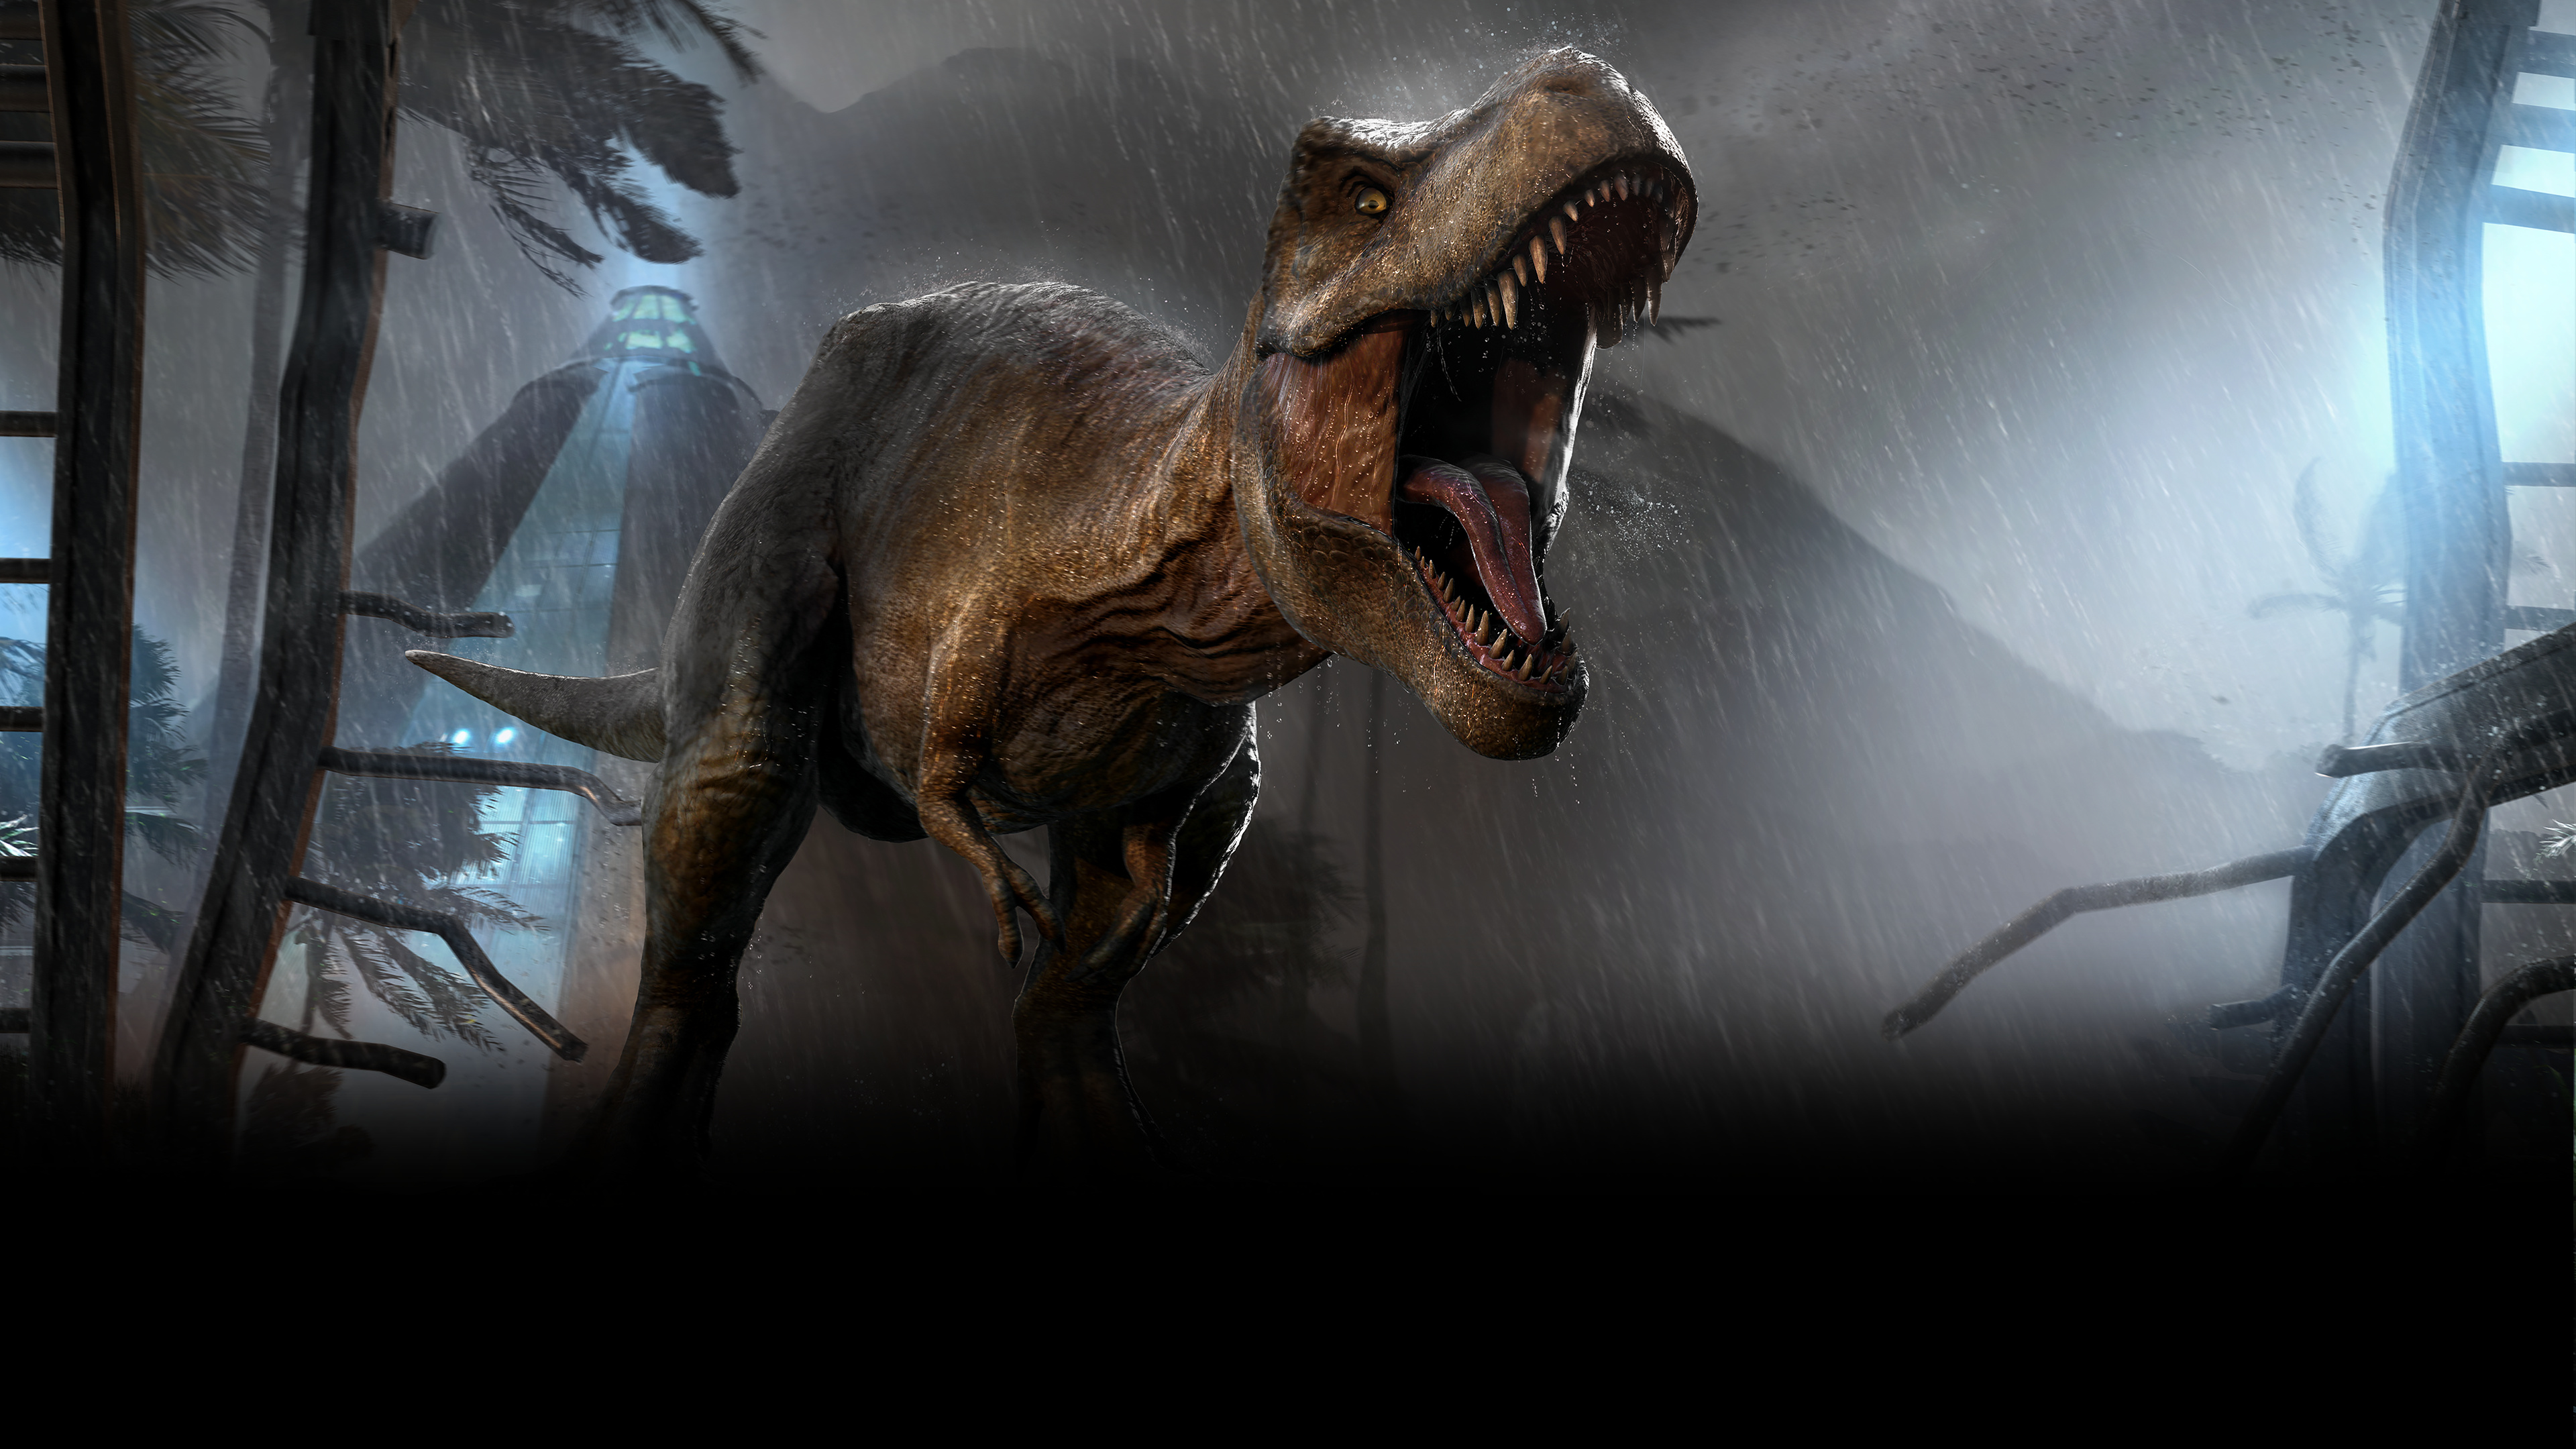 Roaring tyrannosaurus rex, Prehistoric might, Dinosaur kingdom, Ancient reptile, 3840x2160 4K Desktop